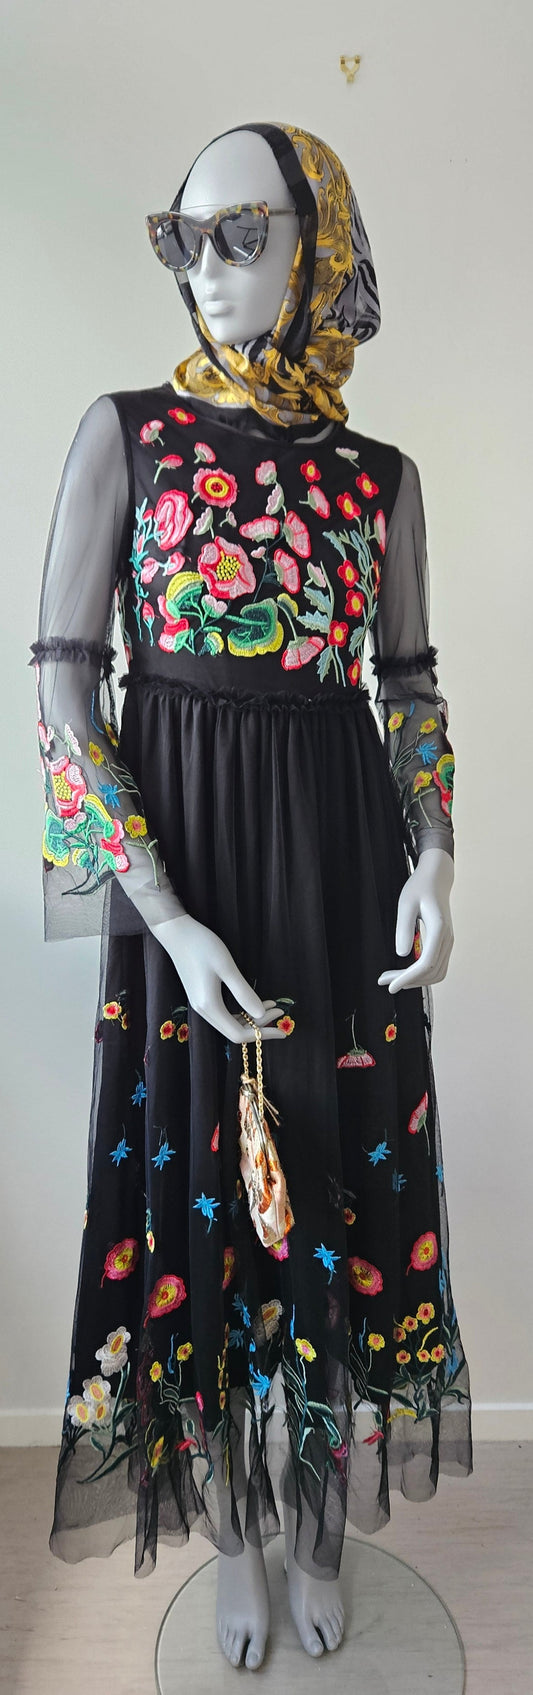 Boho Embroidered Black Floral Long Hippie Festival Summer Dress szMed